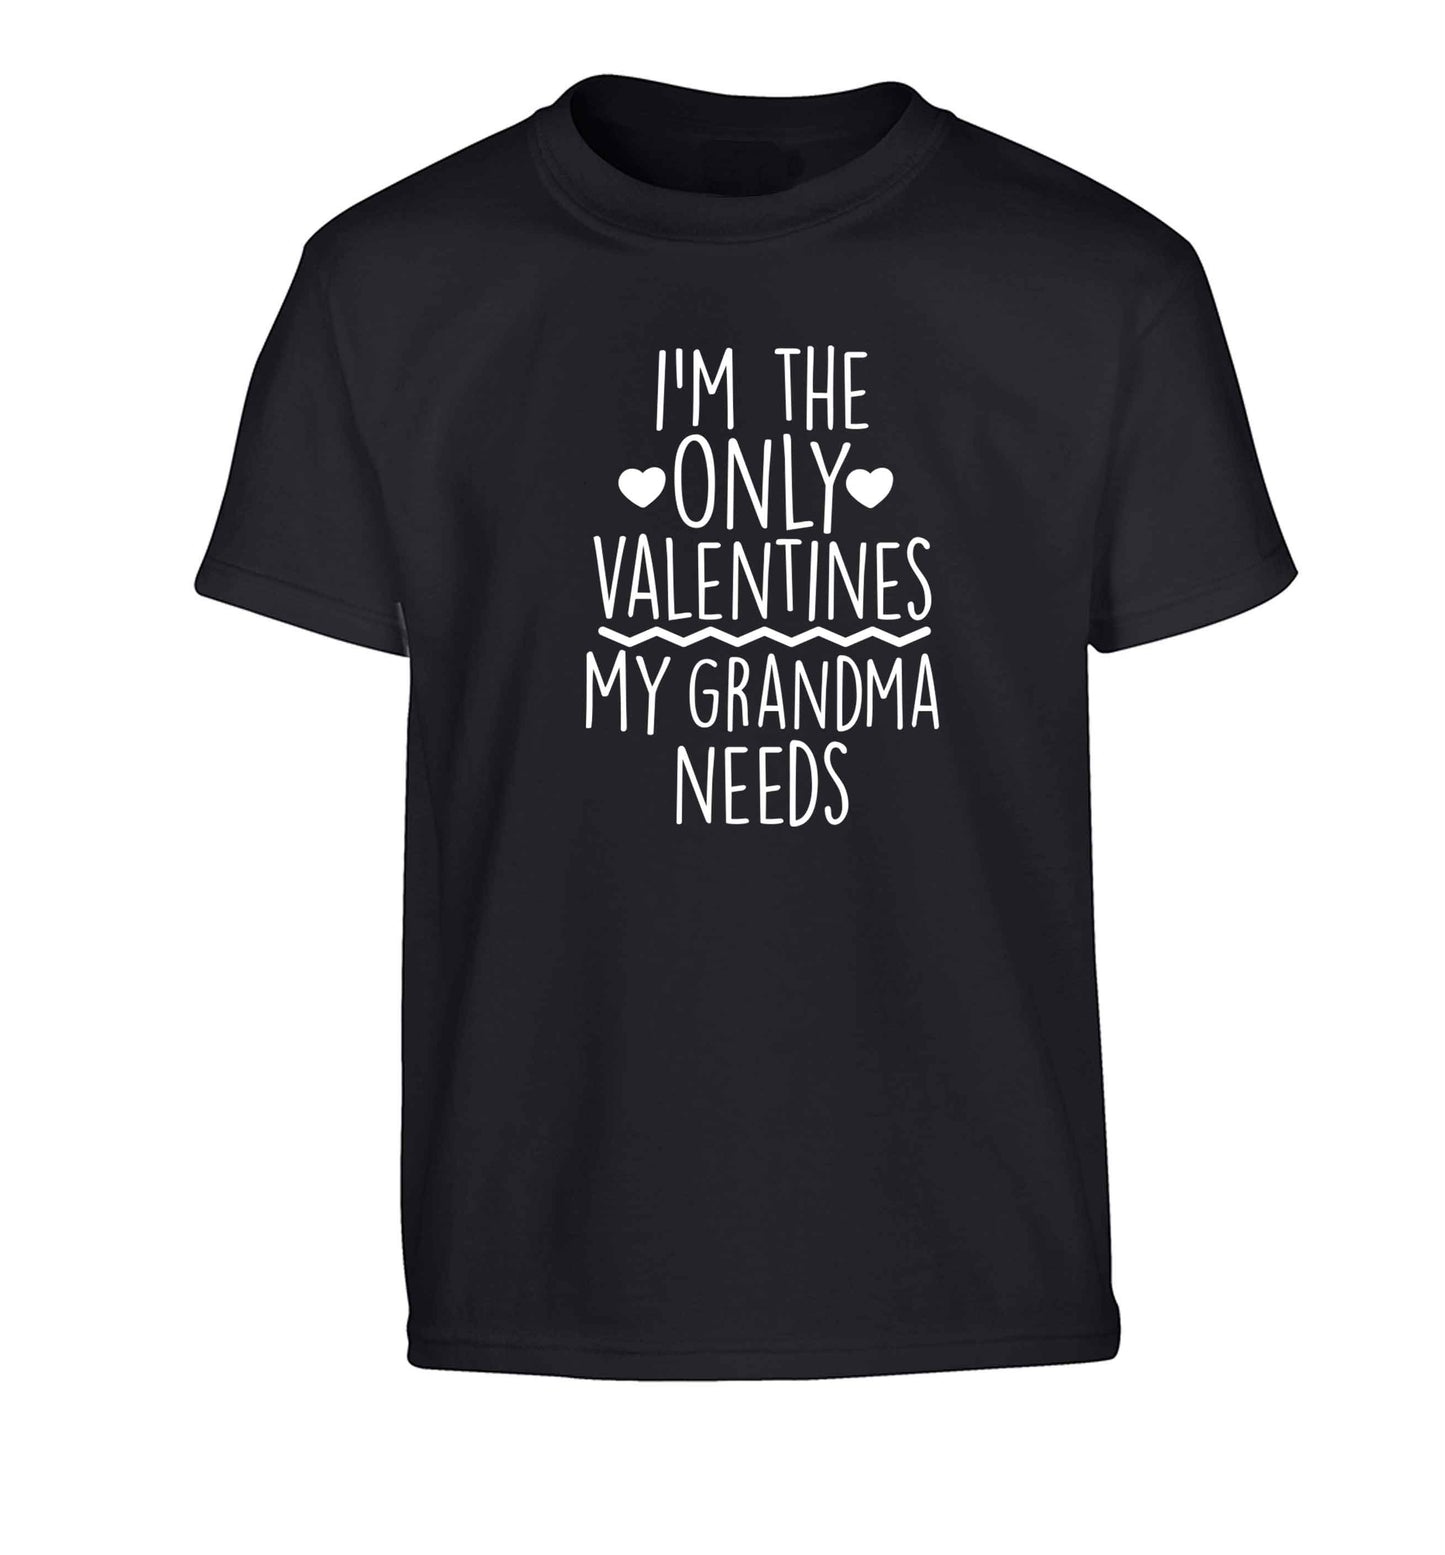 I'm the only valentines my grandma needs Children's black Tshirt 12-13 Years